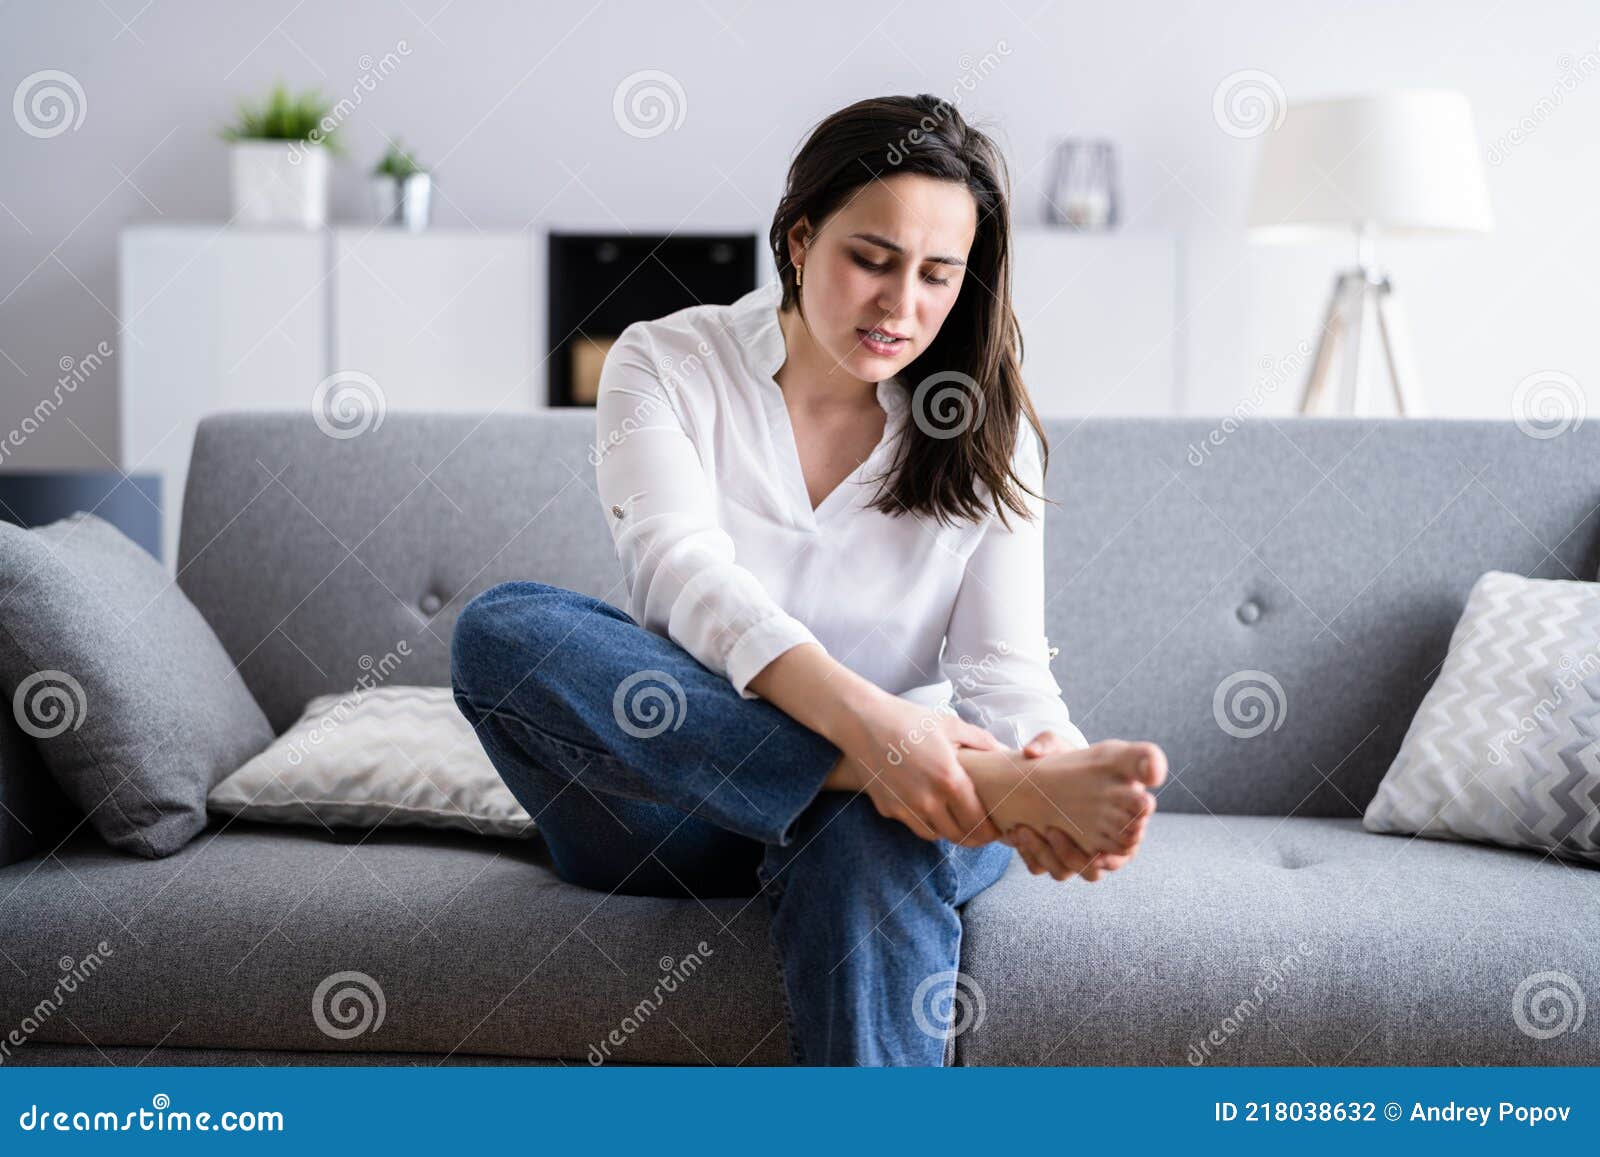 woman feet callus and injured foot